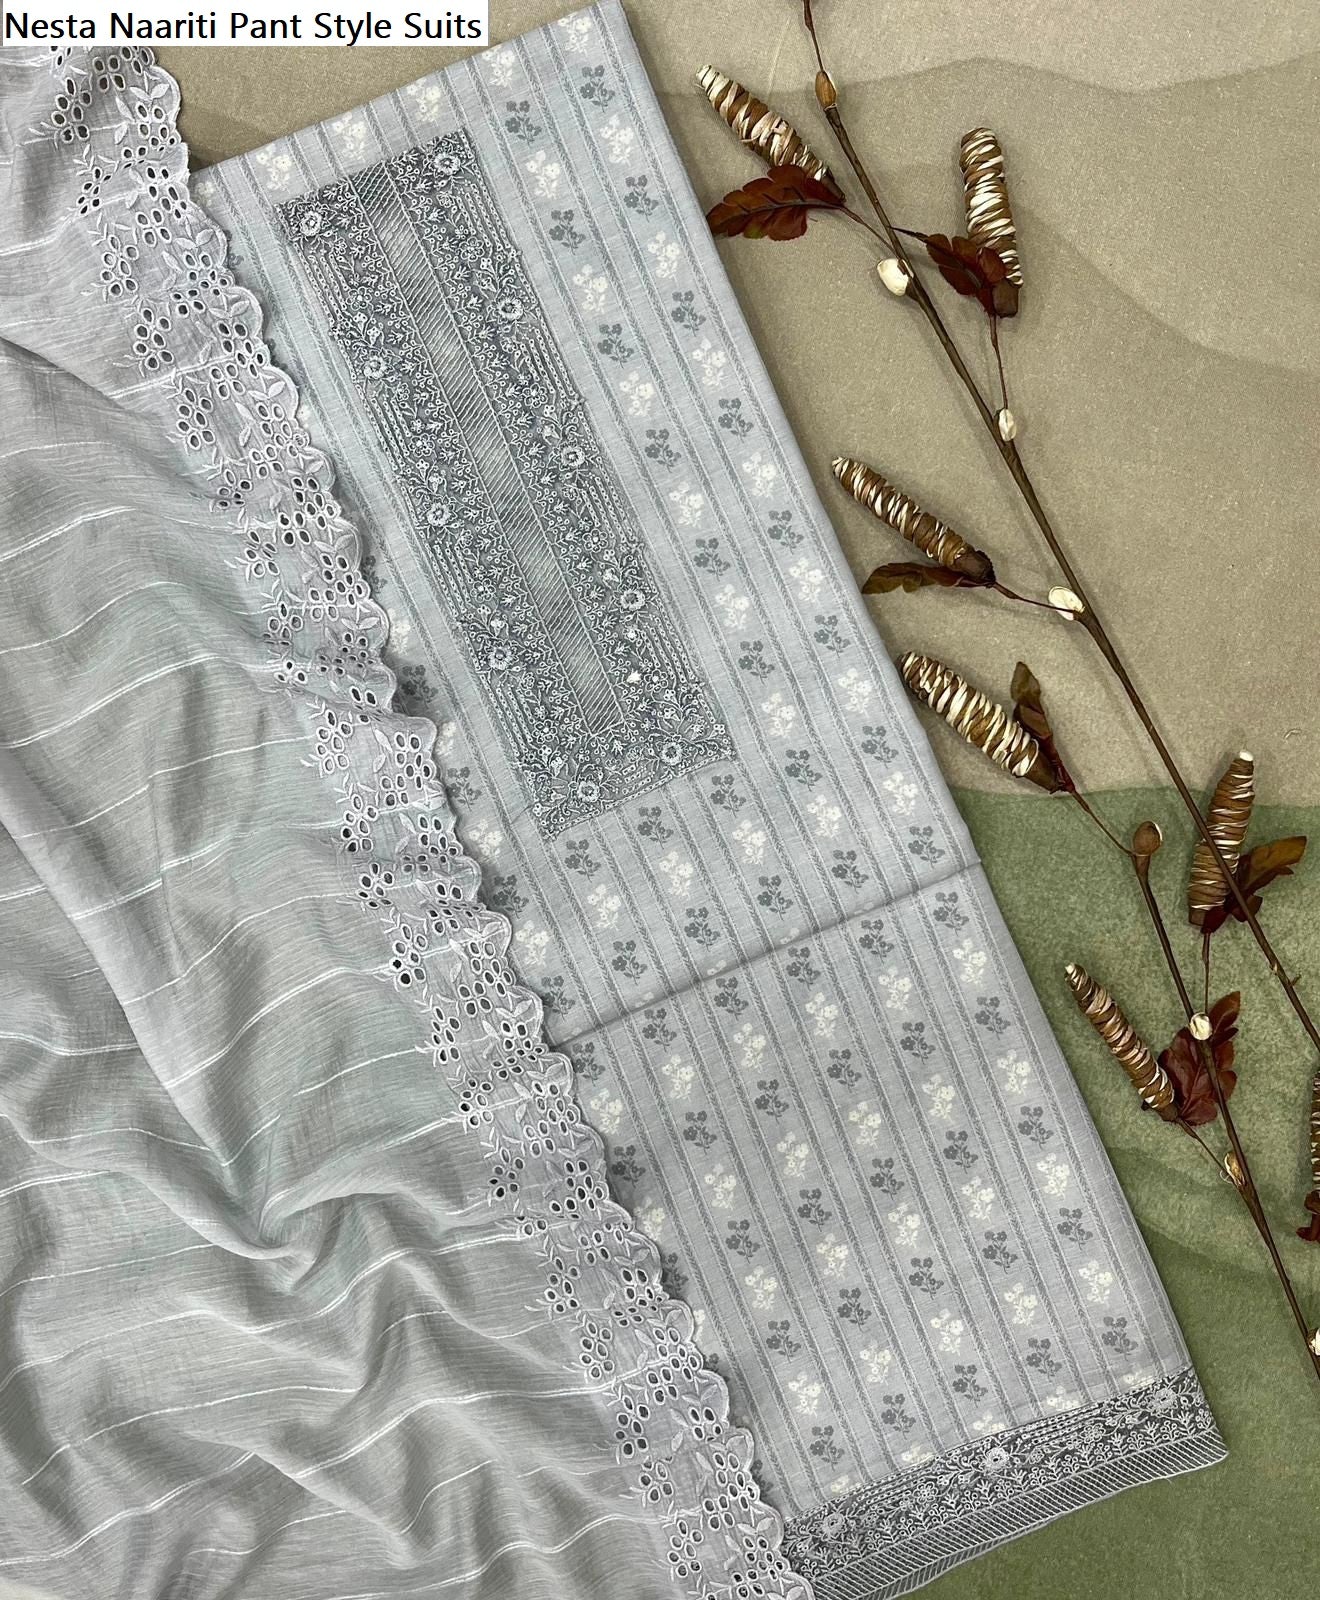 Nesta Naariti Pure Linen Pant Style Suits Supplier